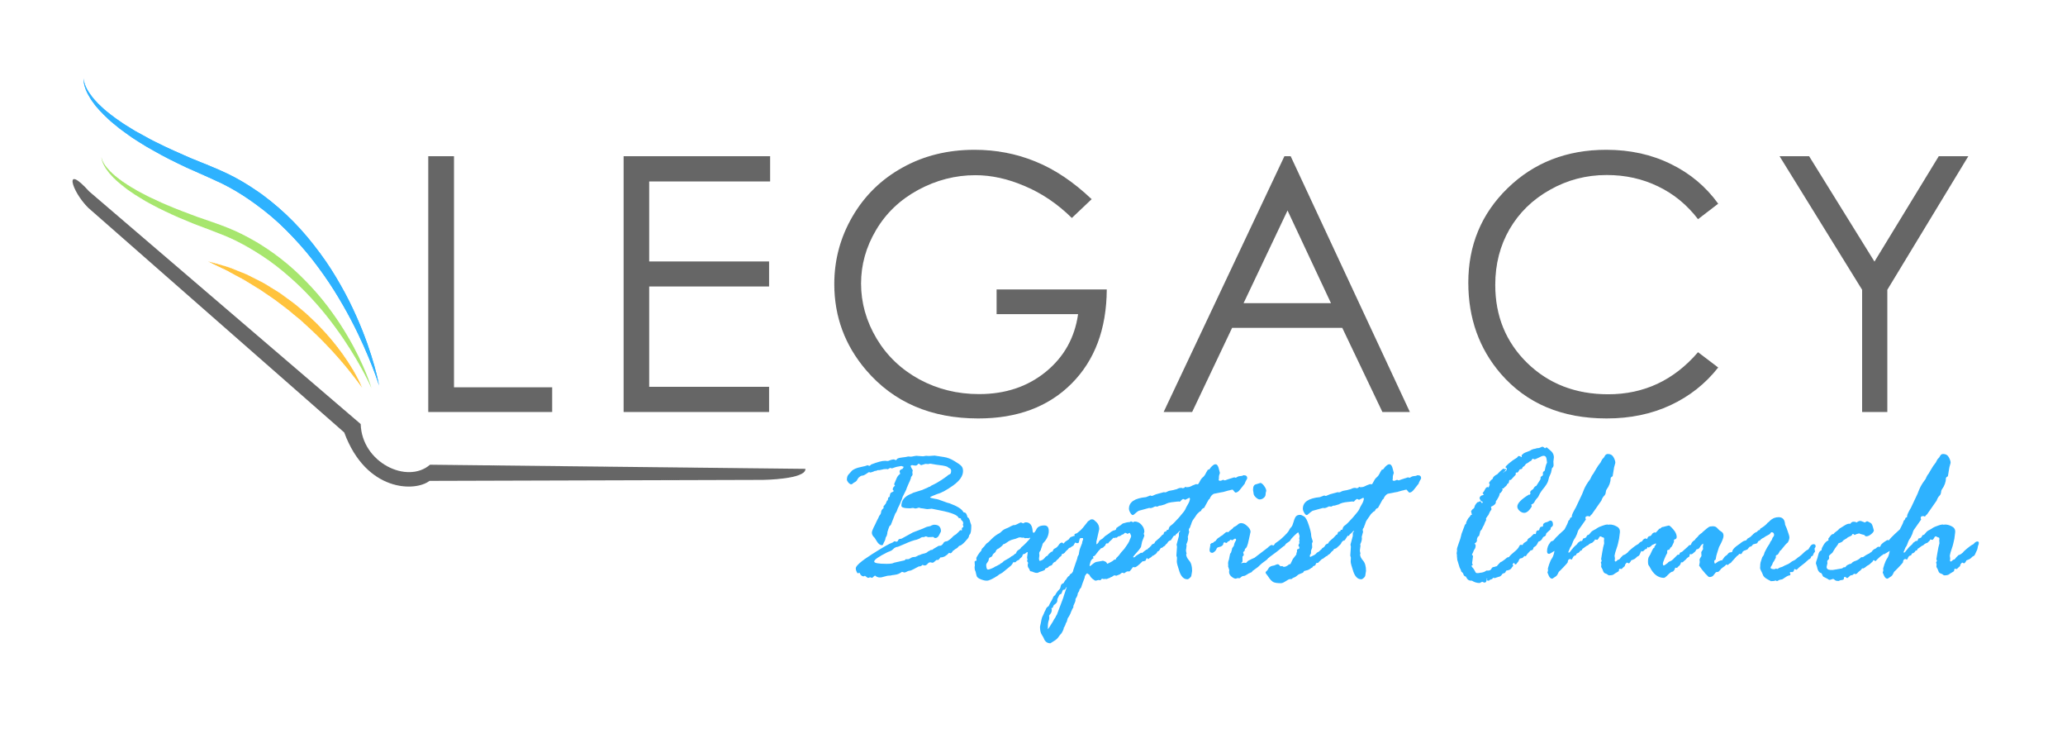 Legacy Baptist Church